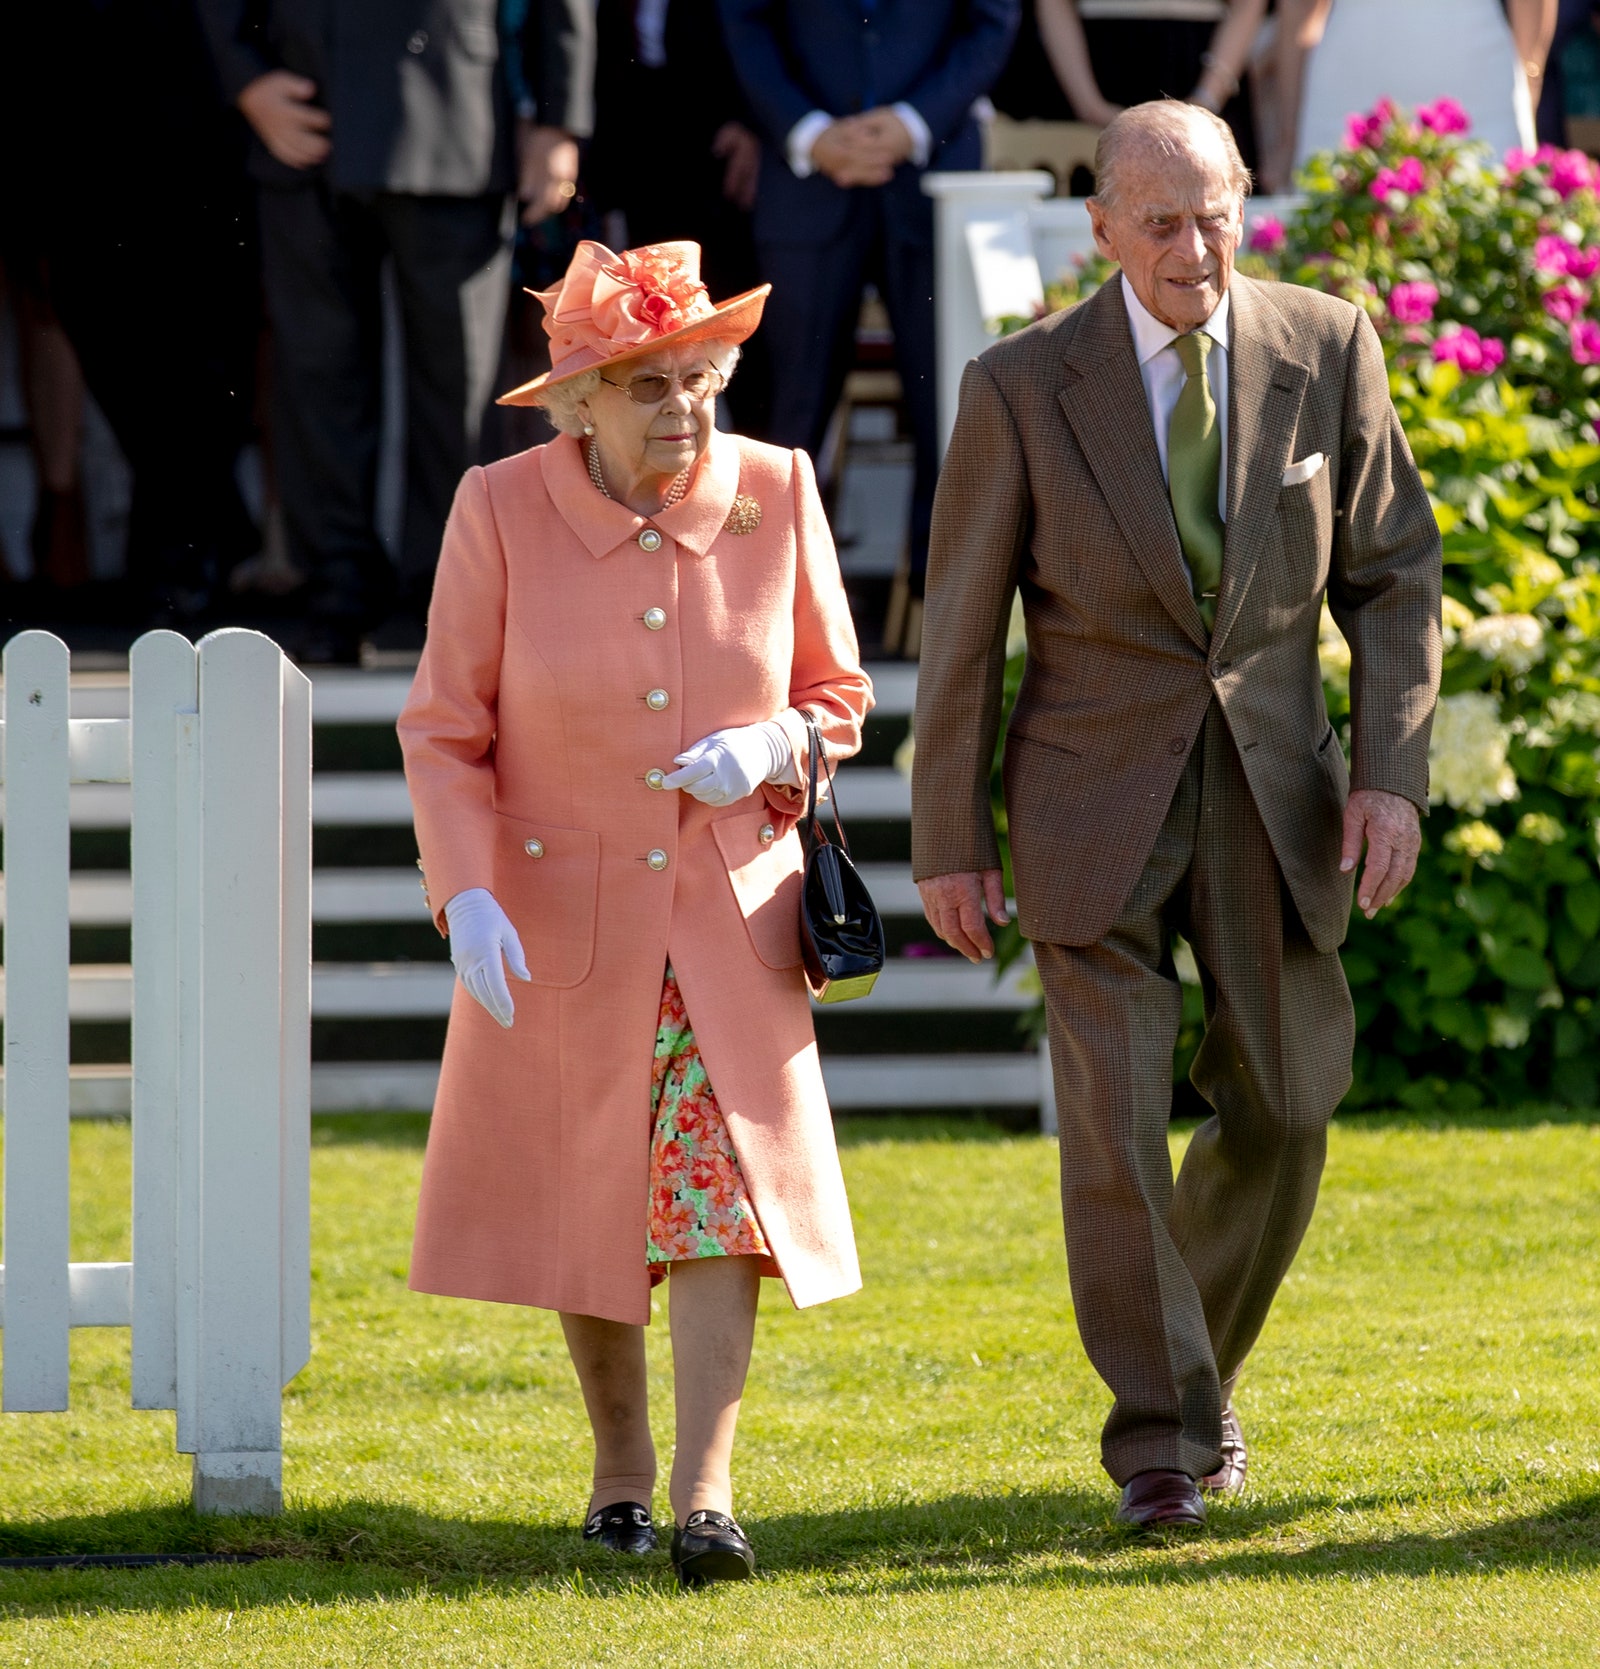 СМИ королева Елизавета II и принц Филипп уехали из Букингемского дворца изза распространения коронавируса